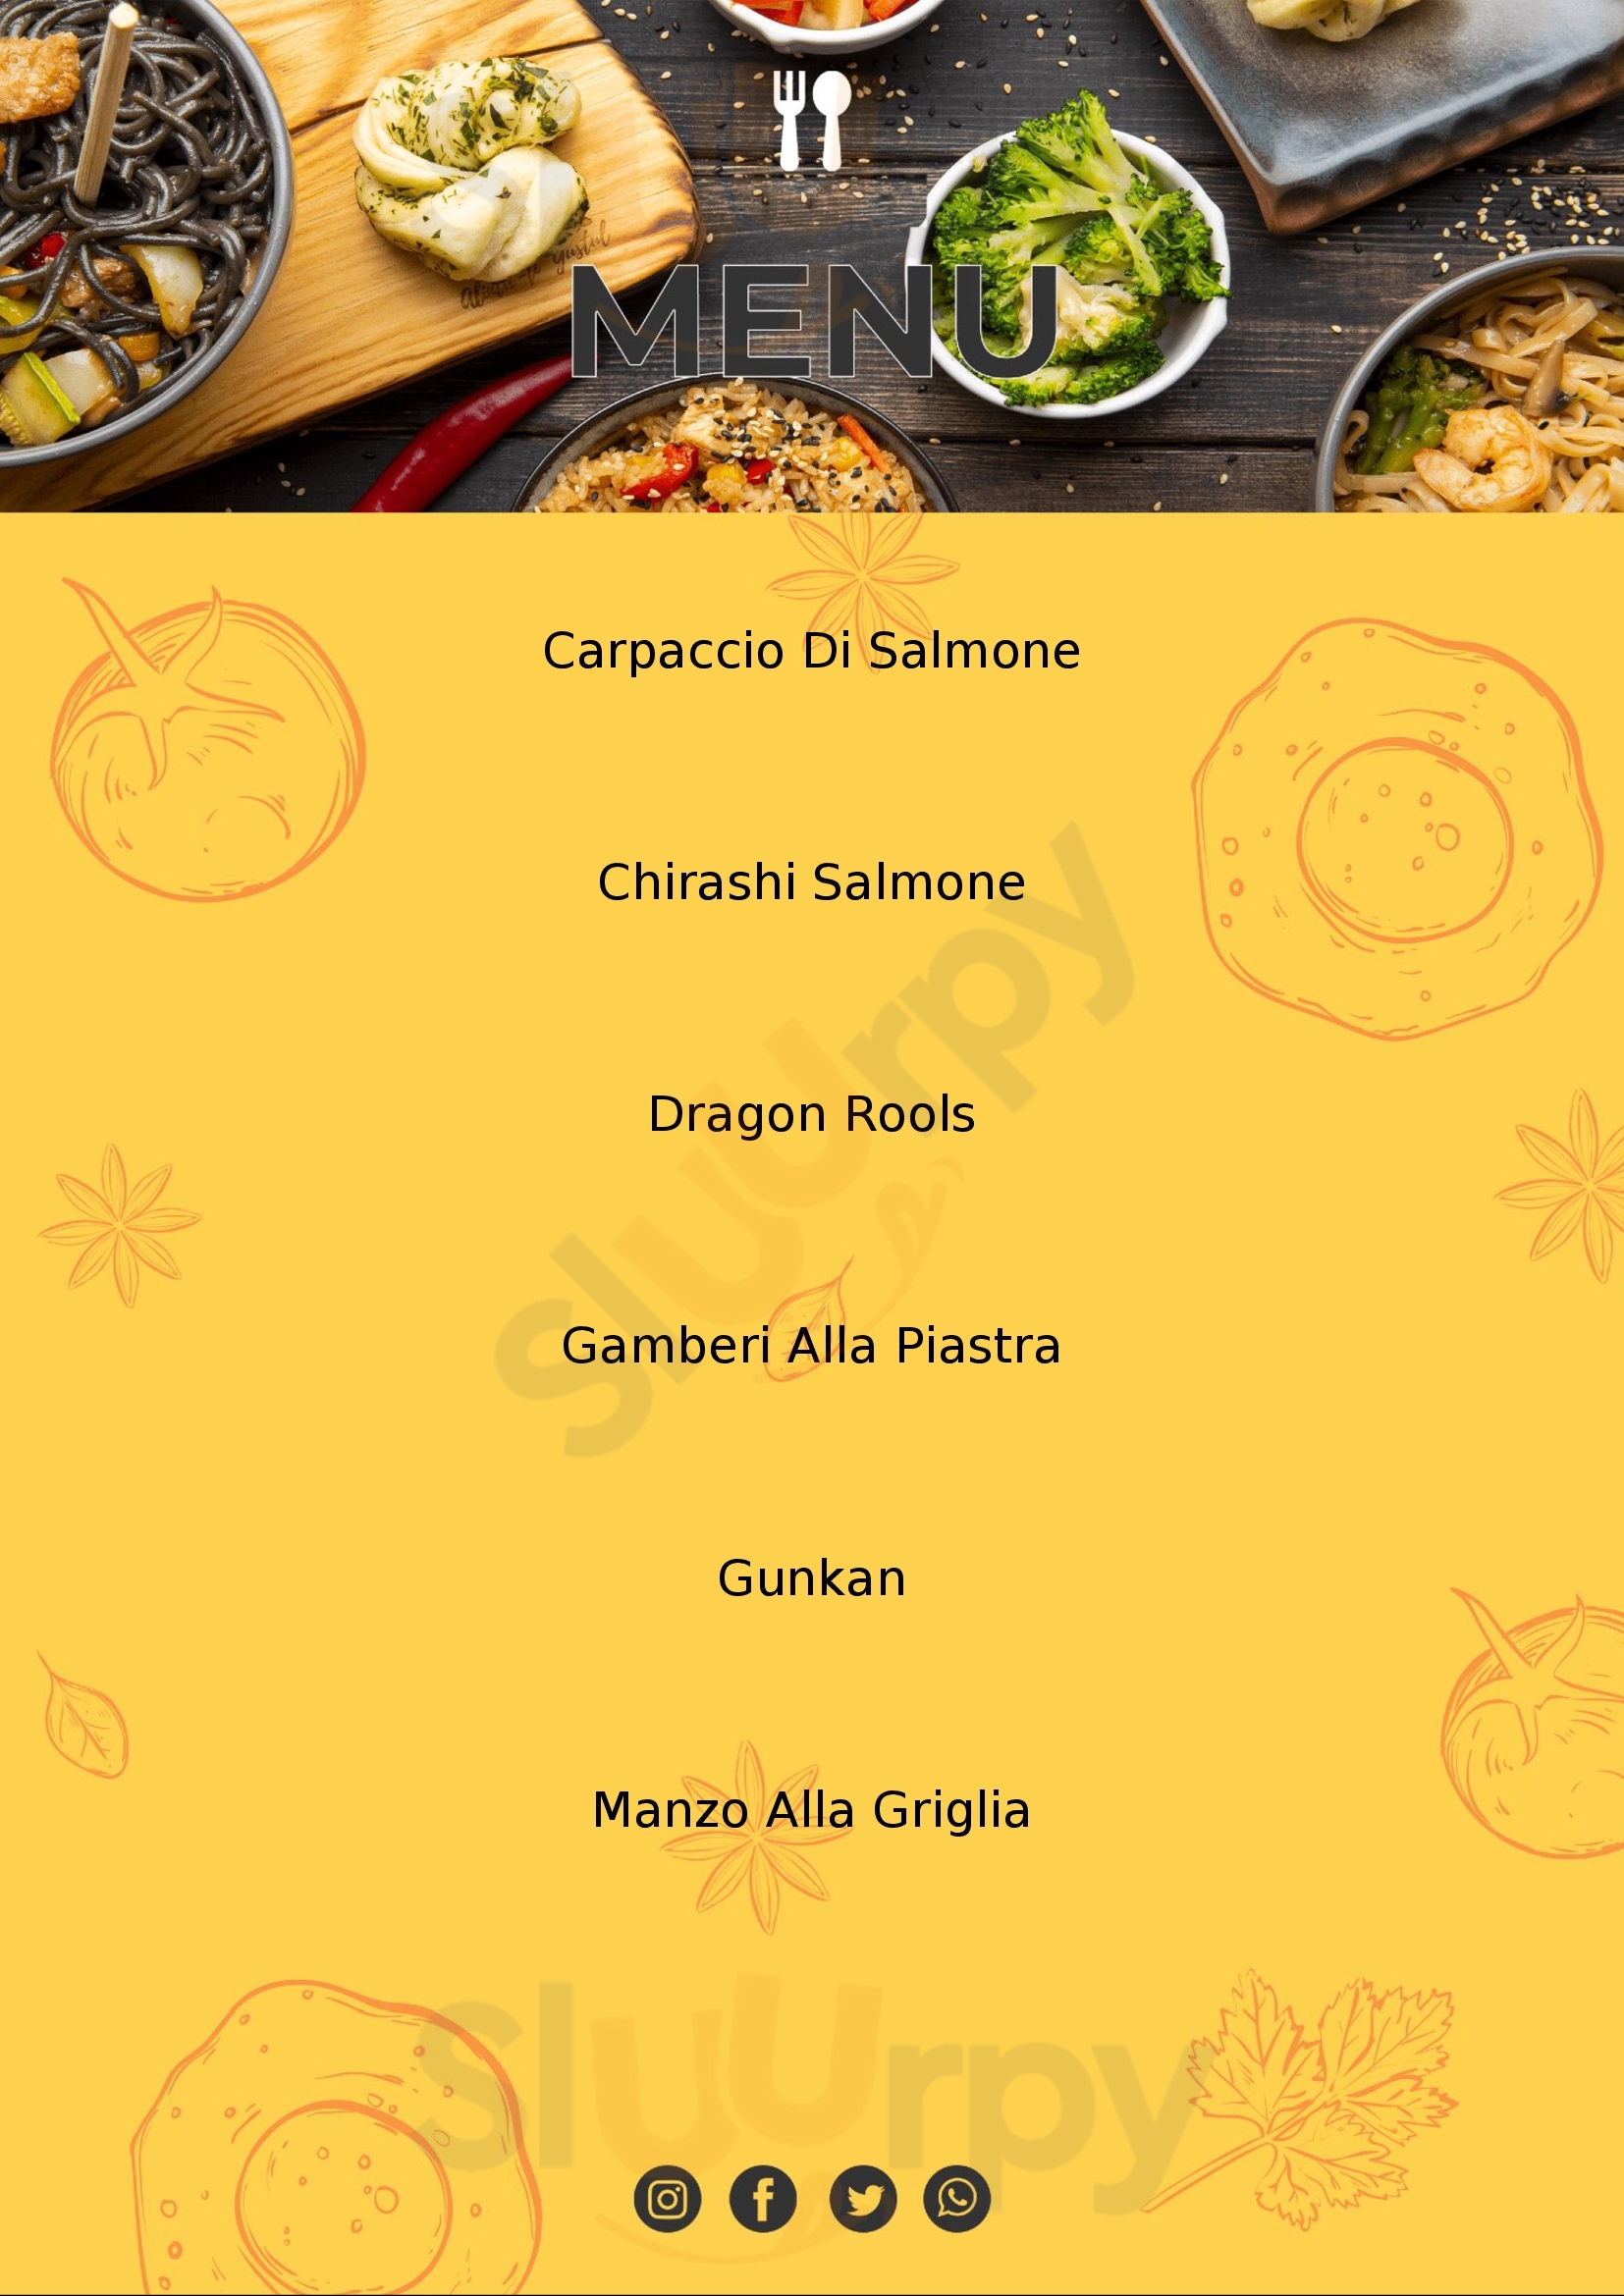 Oishi Sushi Romano di Lombardia menù 1 pagina